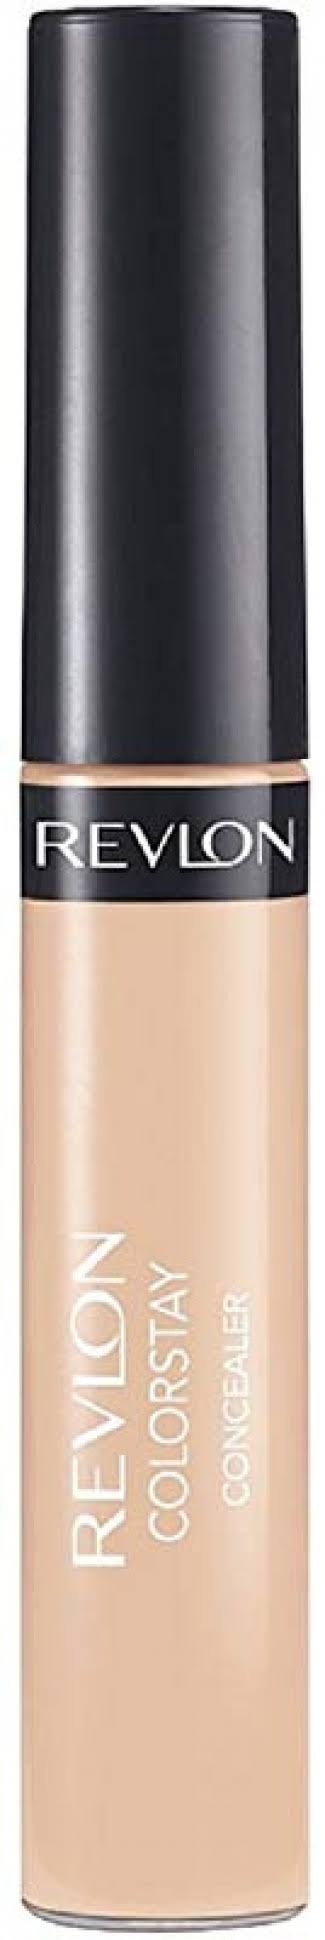 Revlon ColorStay Concealer - Light Medium